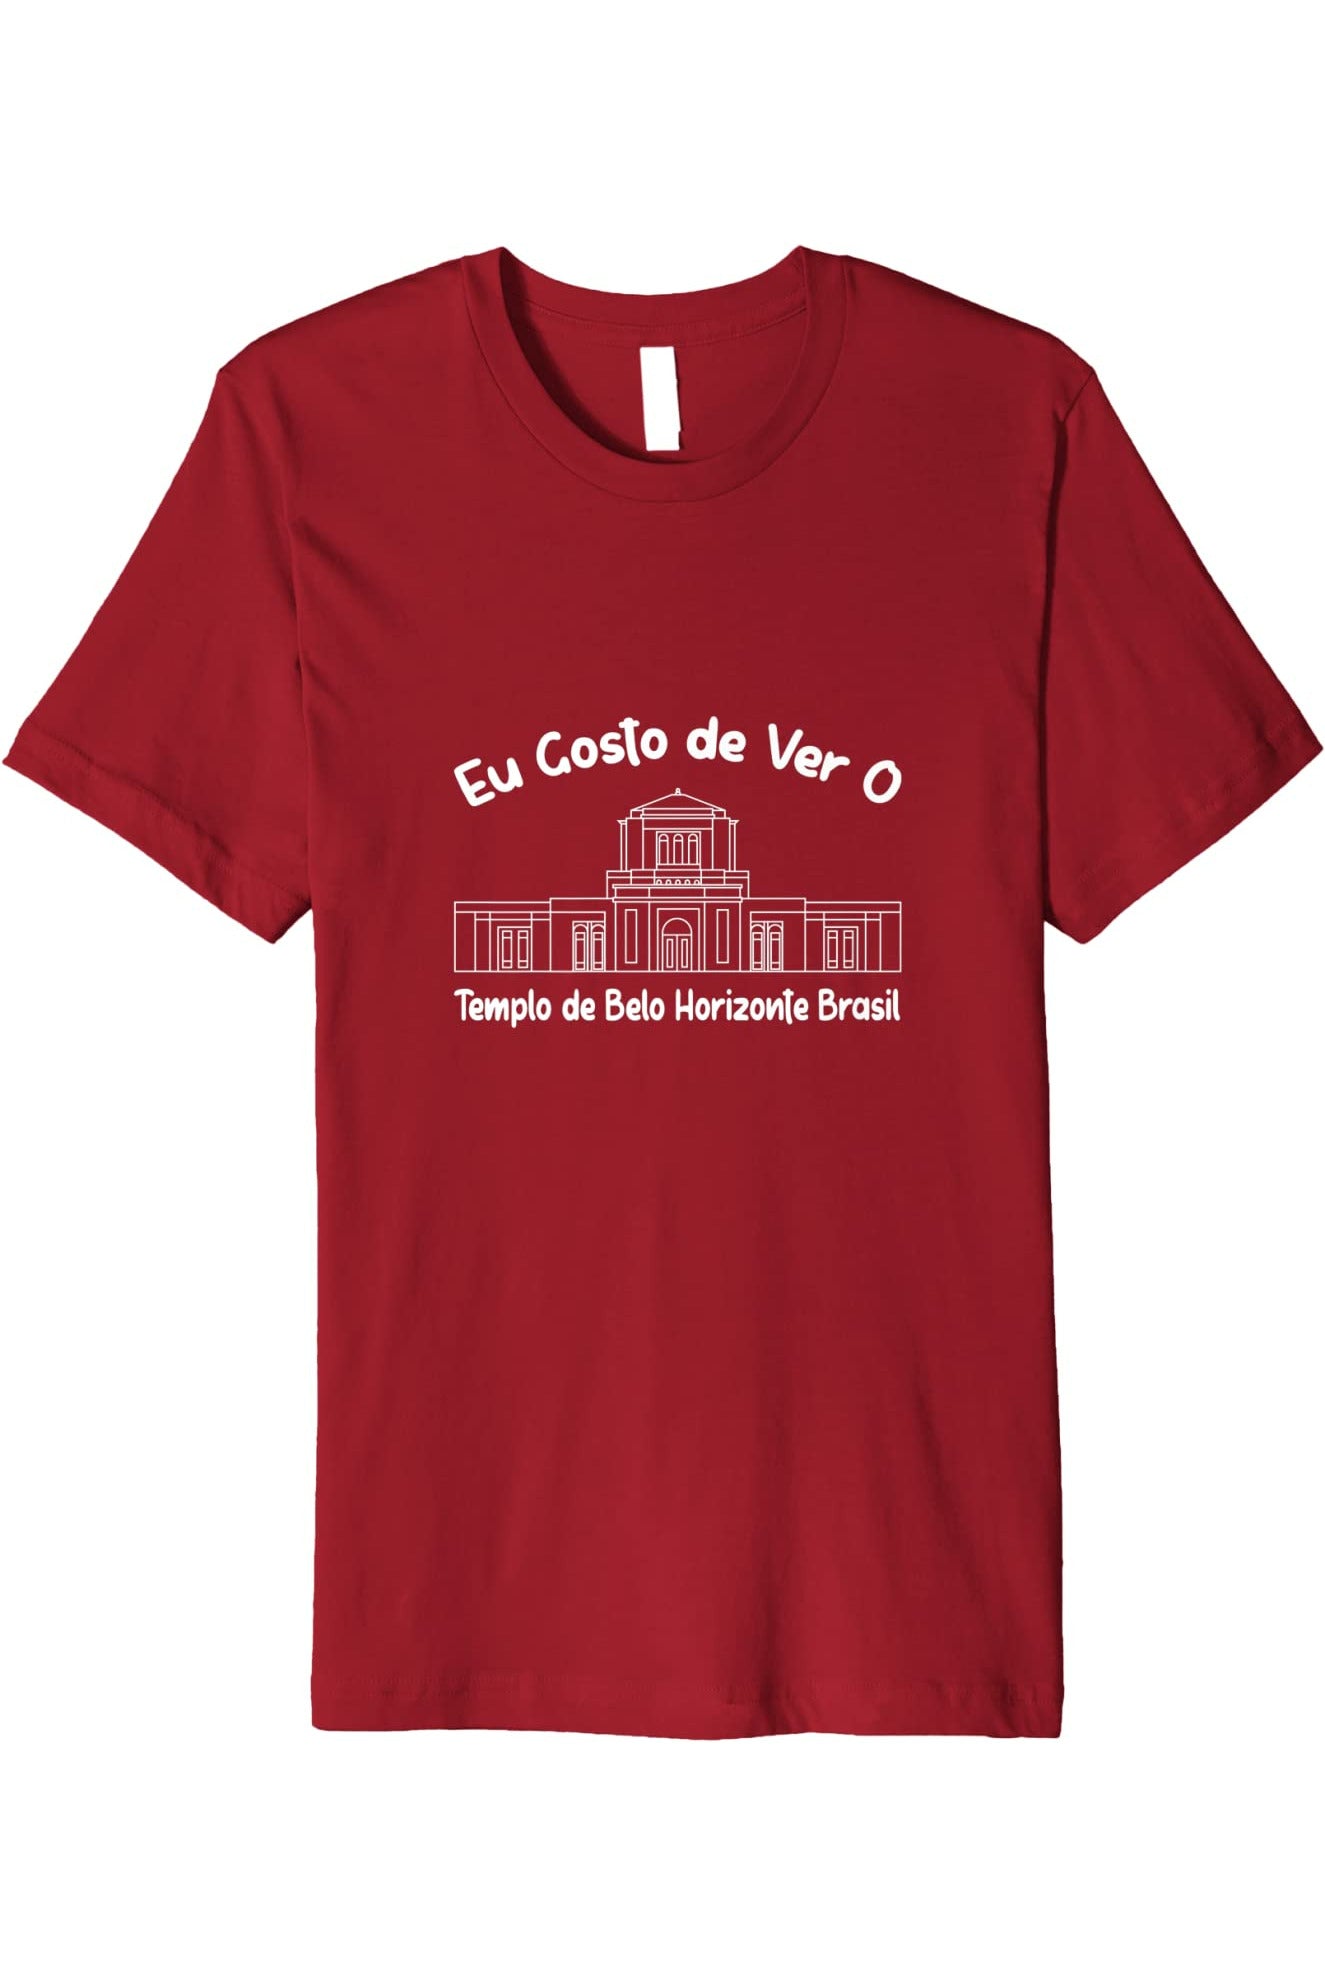 Belo Horizonte Brazil Temple T-Shirt - Premium - Primary Style (Portuguese) US